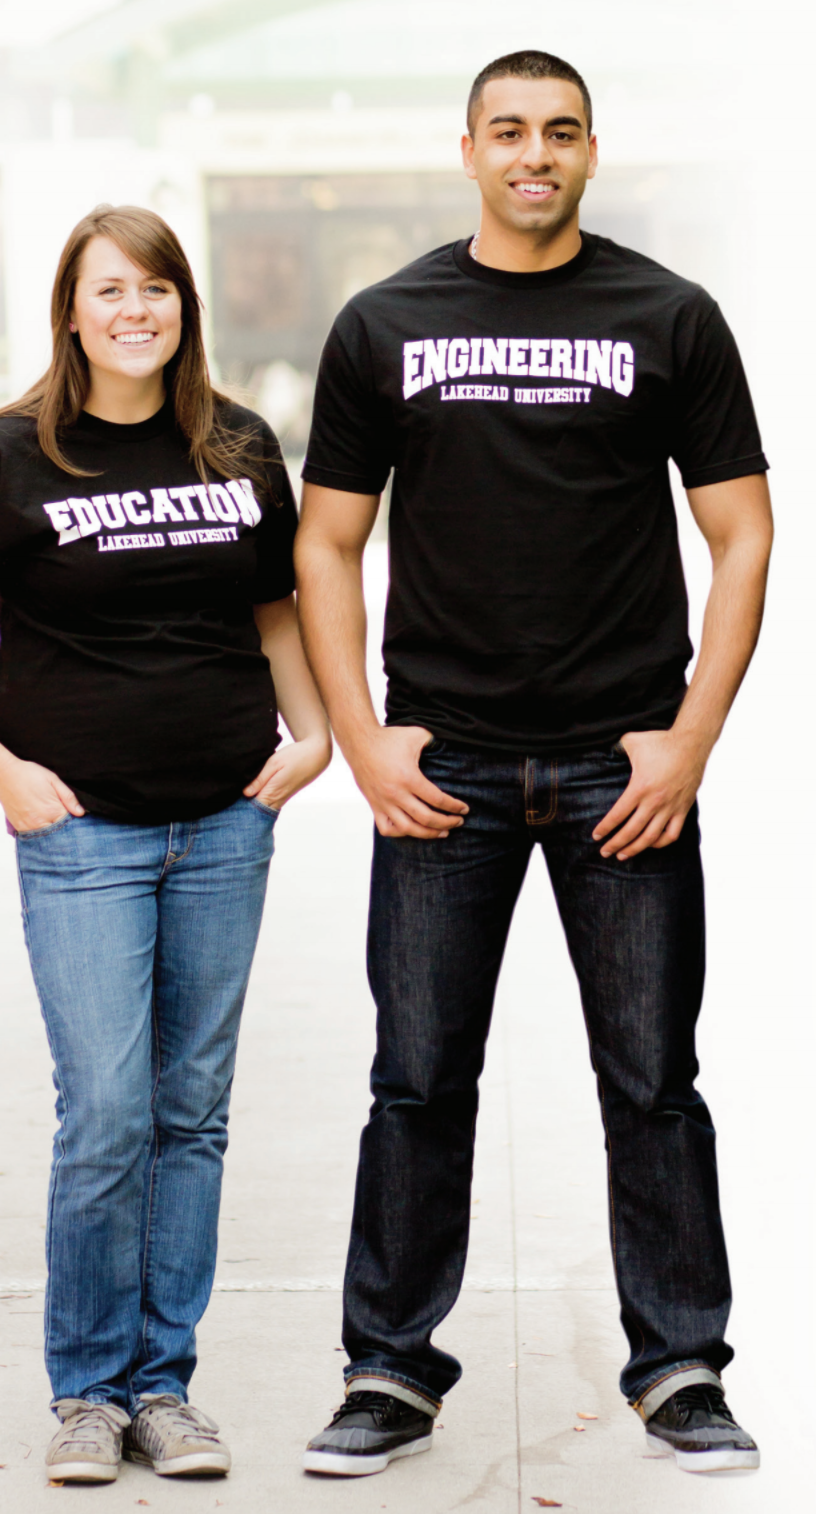 Two Lakehead University students wearing Engineering tshirts